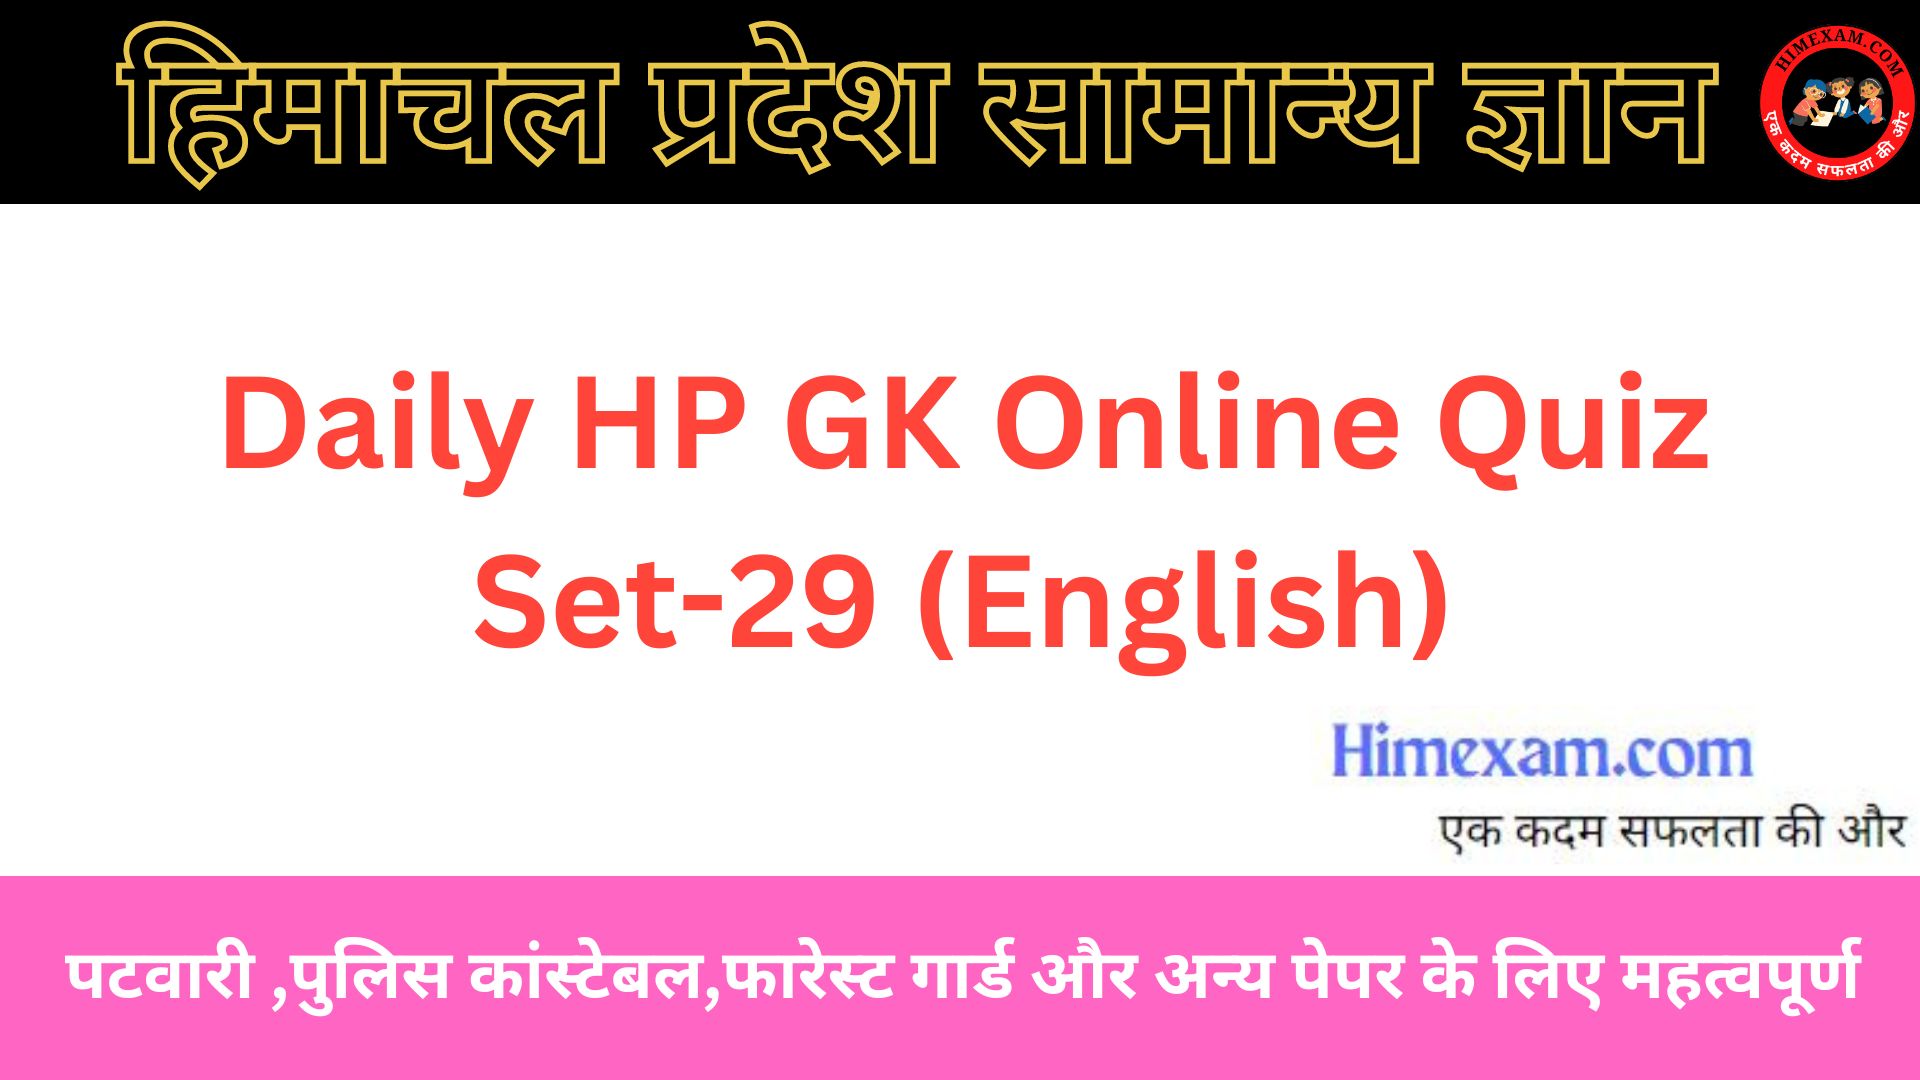 Daily HP GK Online Quiz Set-29 (English)